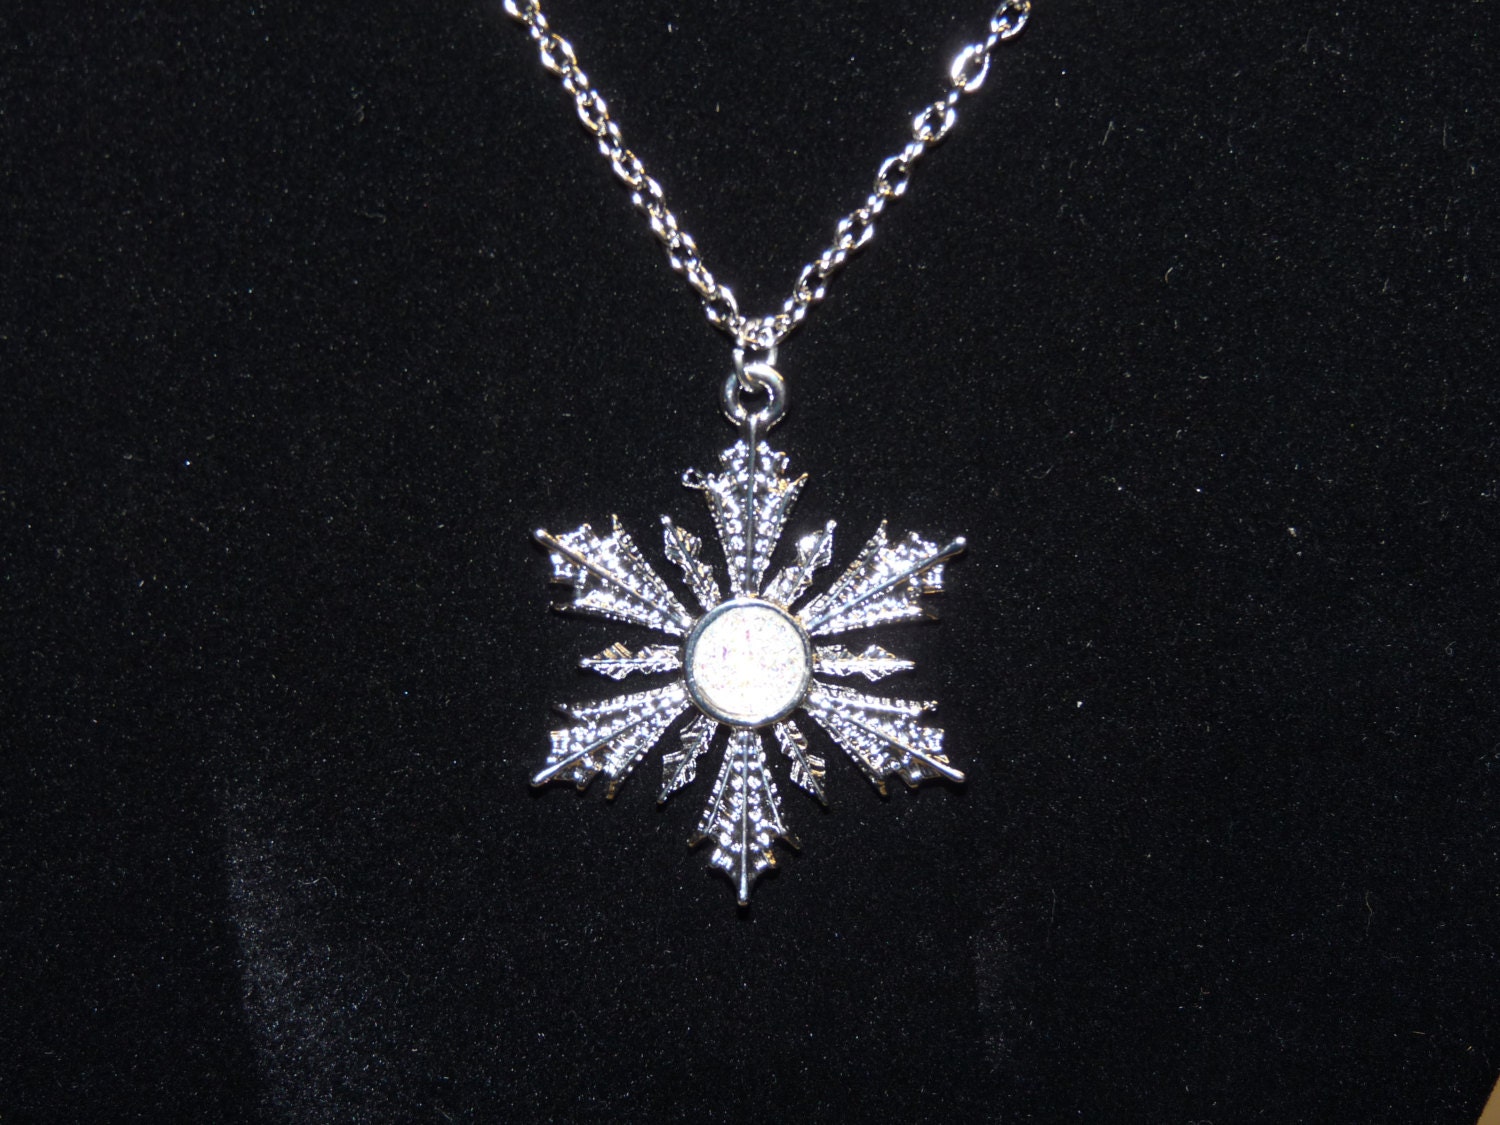 Elsa Snowflake necklace Disney Frozen by MoonstoneEmporium on Etsy